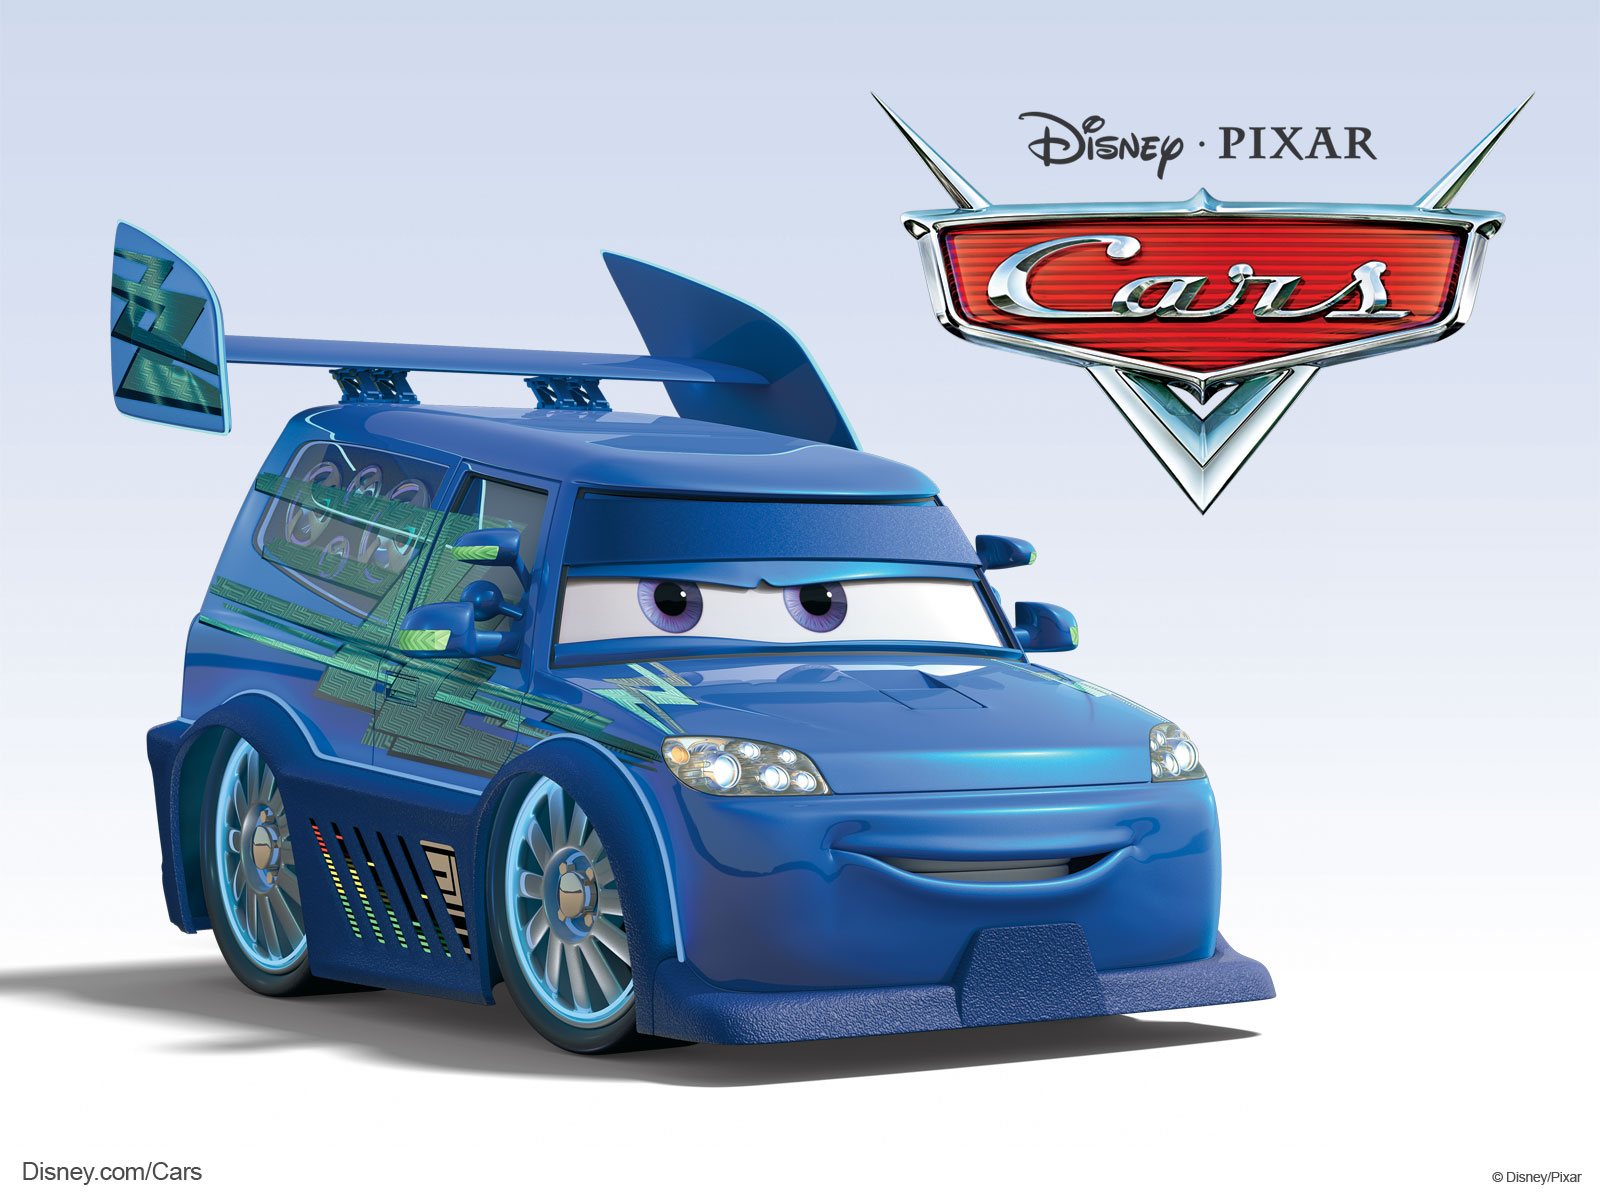 DJ the custom car from DisneyPixar movie Cars wallpaper